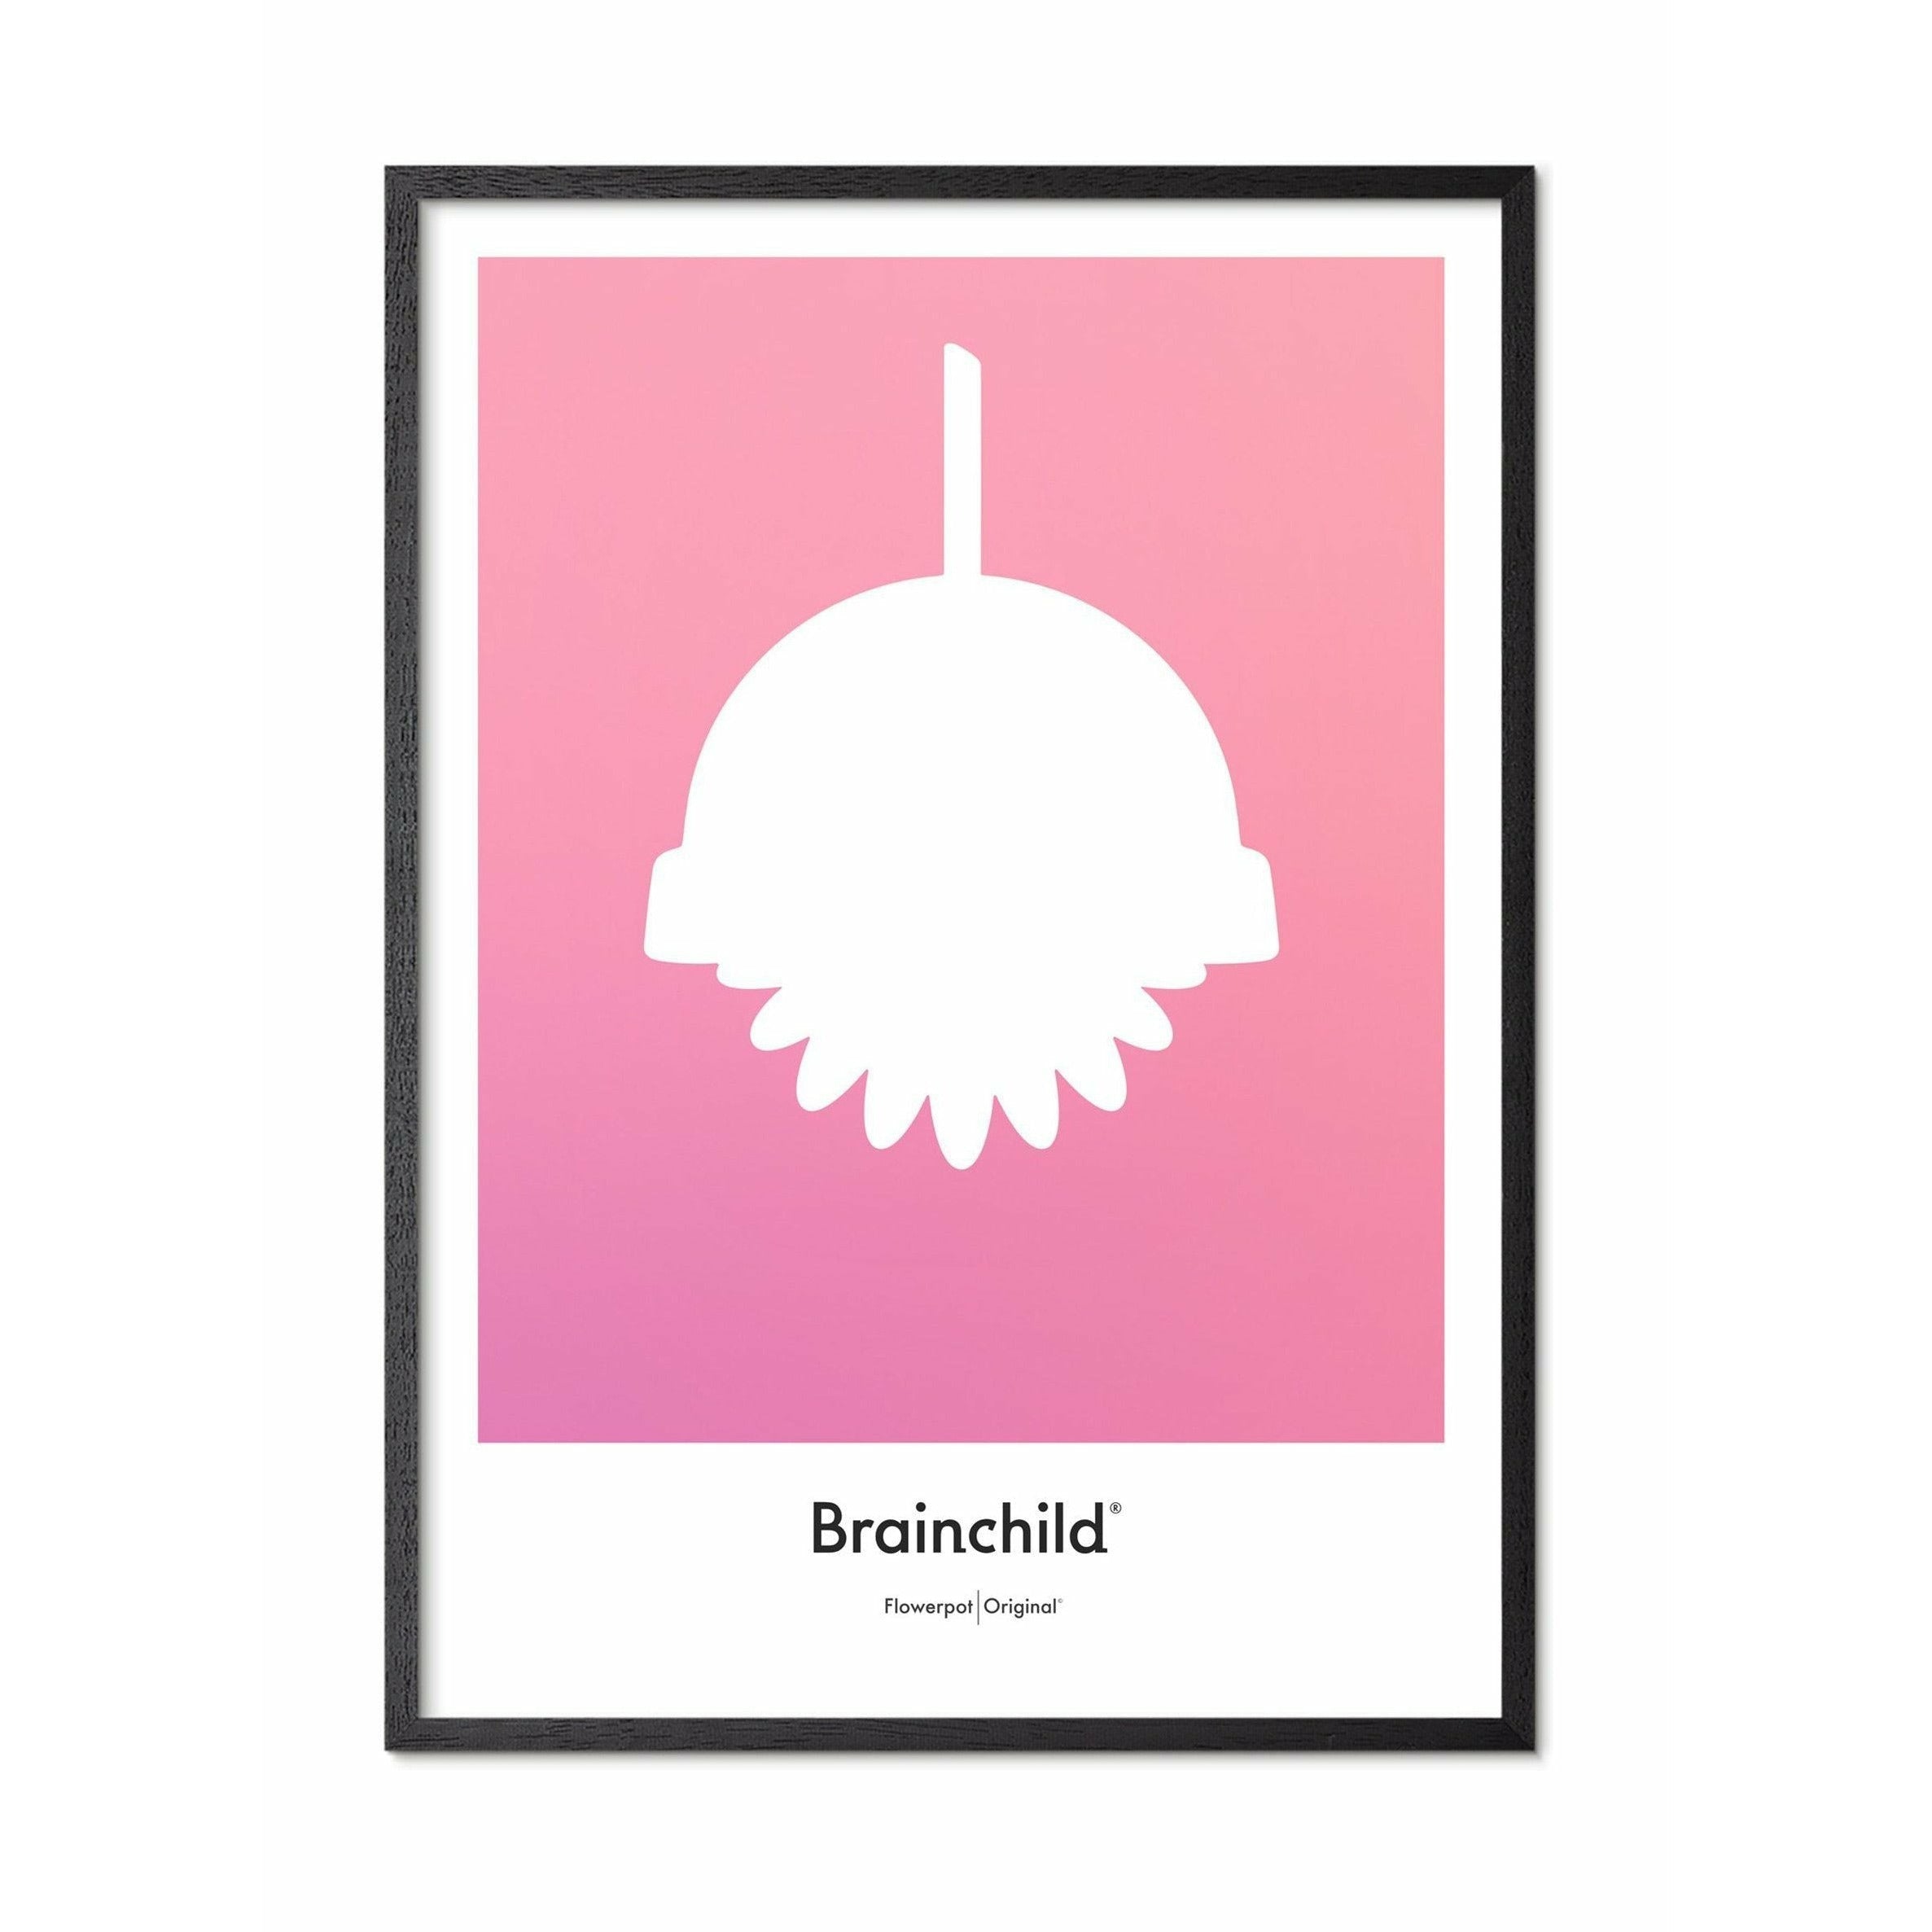 Brainchild Blumentopf Design Icon Poster, Rahmen In Schwarz Lackiert Holz 70x100 Cm, Rosa